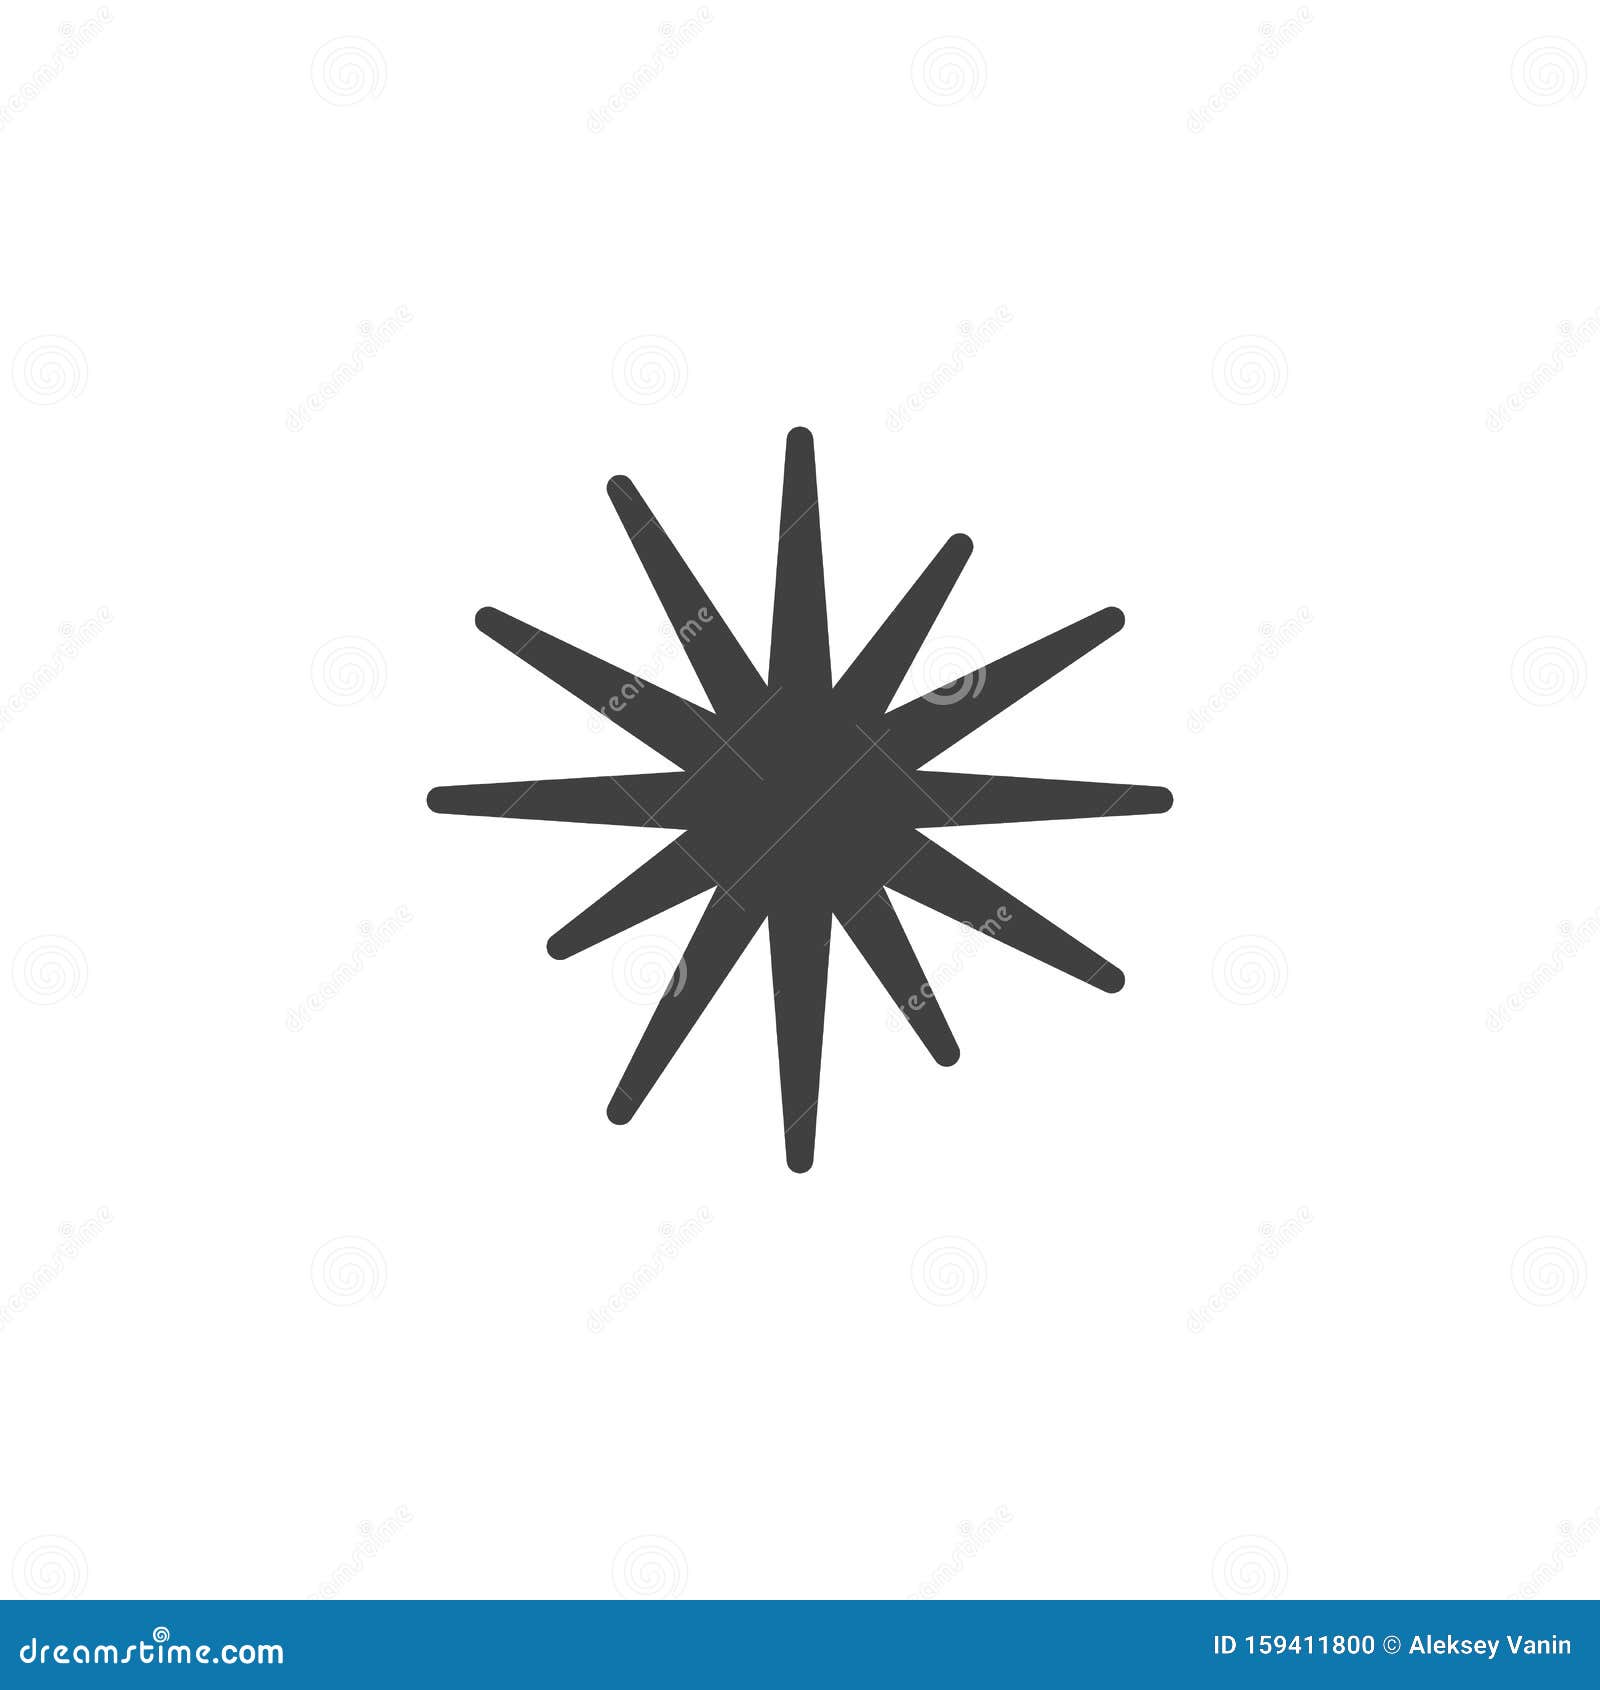 Star flare vector icon stock vector. Illustration of illustration